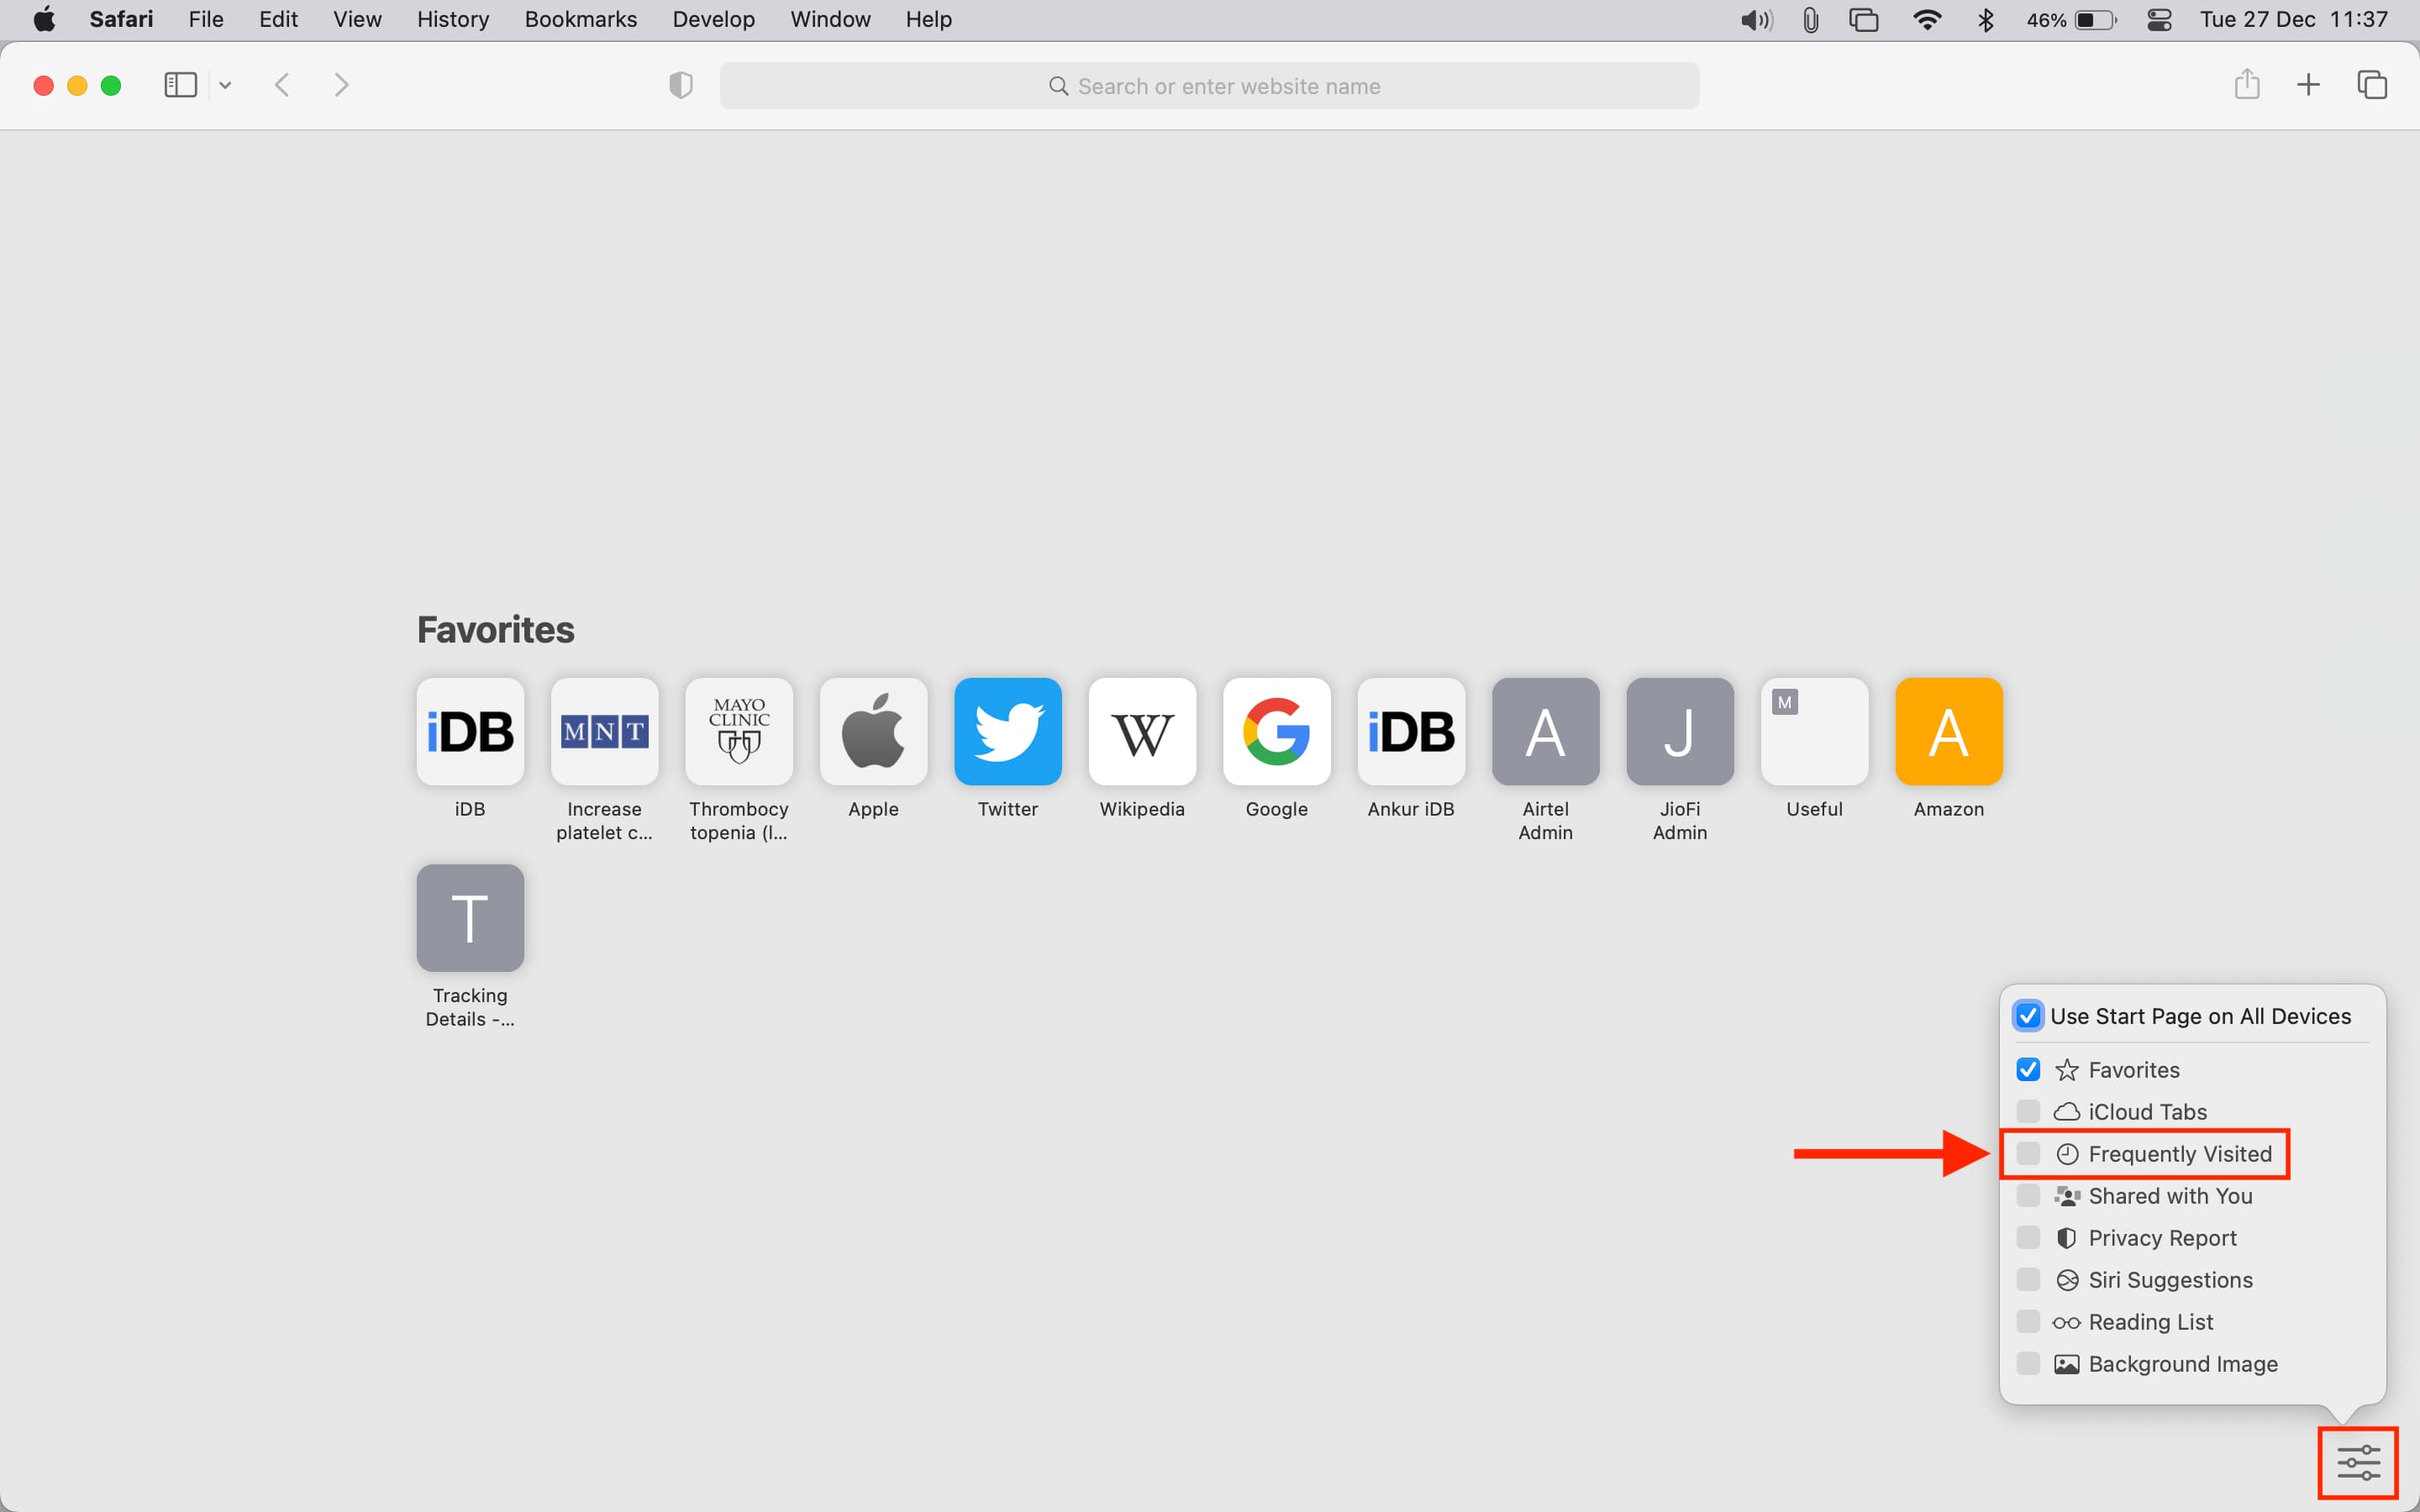 снимите флажок с часто посещаемых Safari Mac | удалить часто посещаемые сайты Safari на Mac/iPhone/iPad